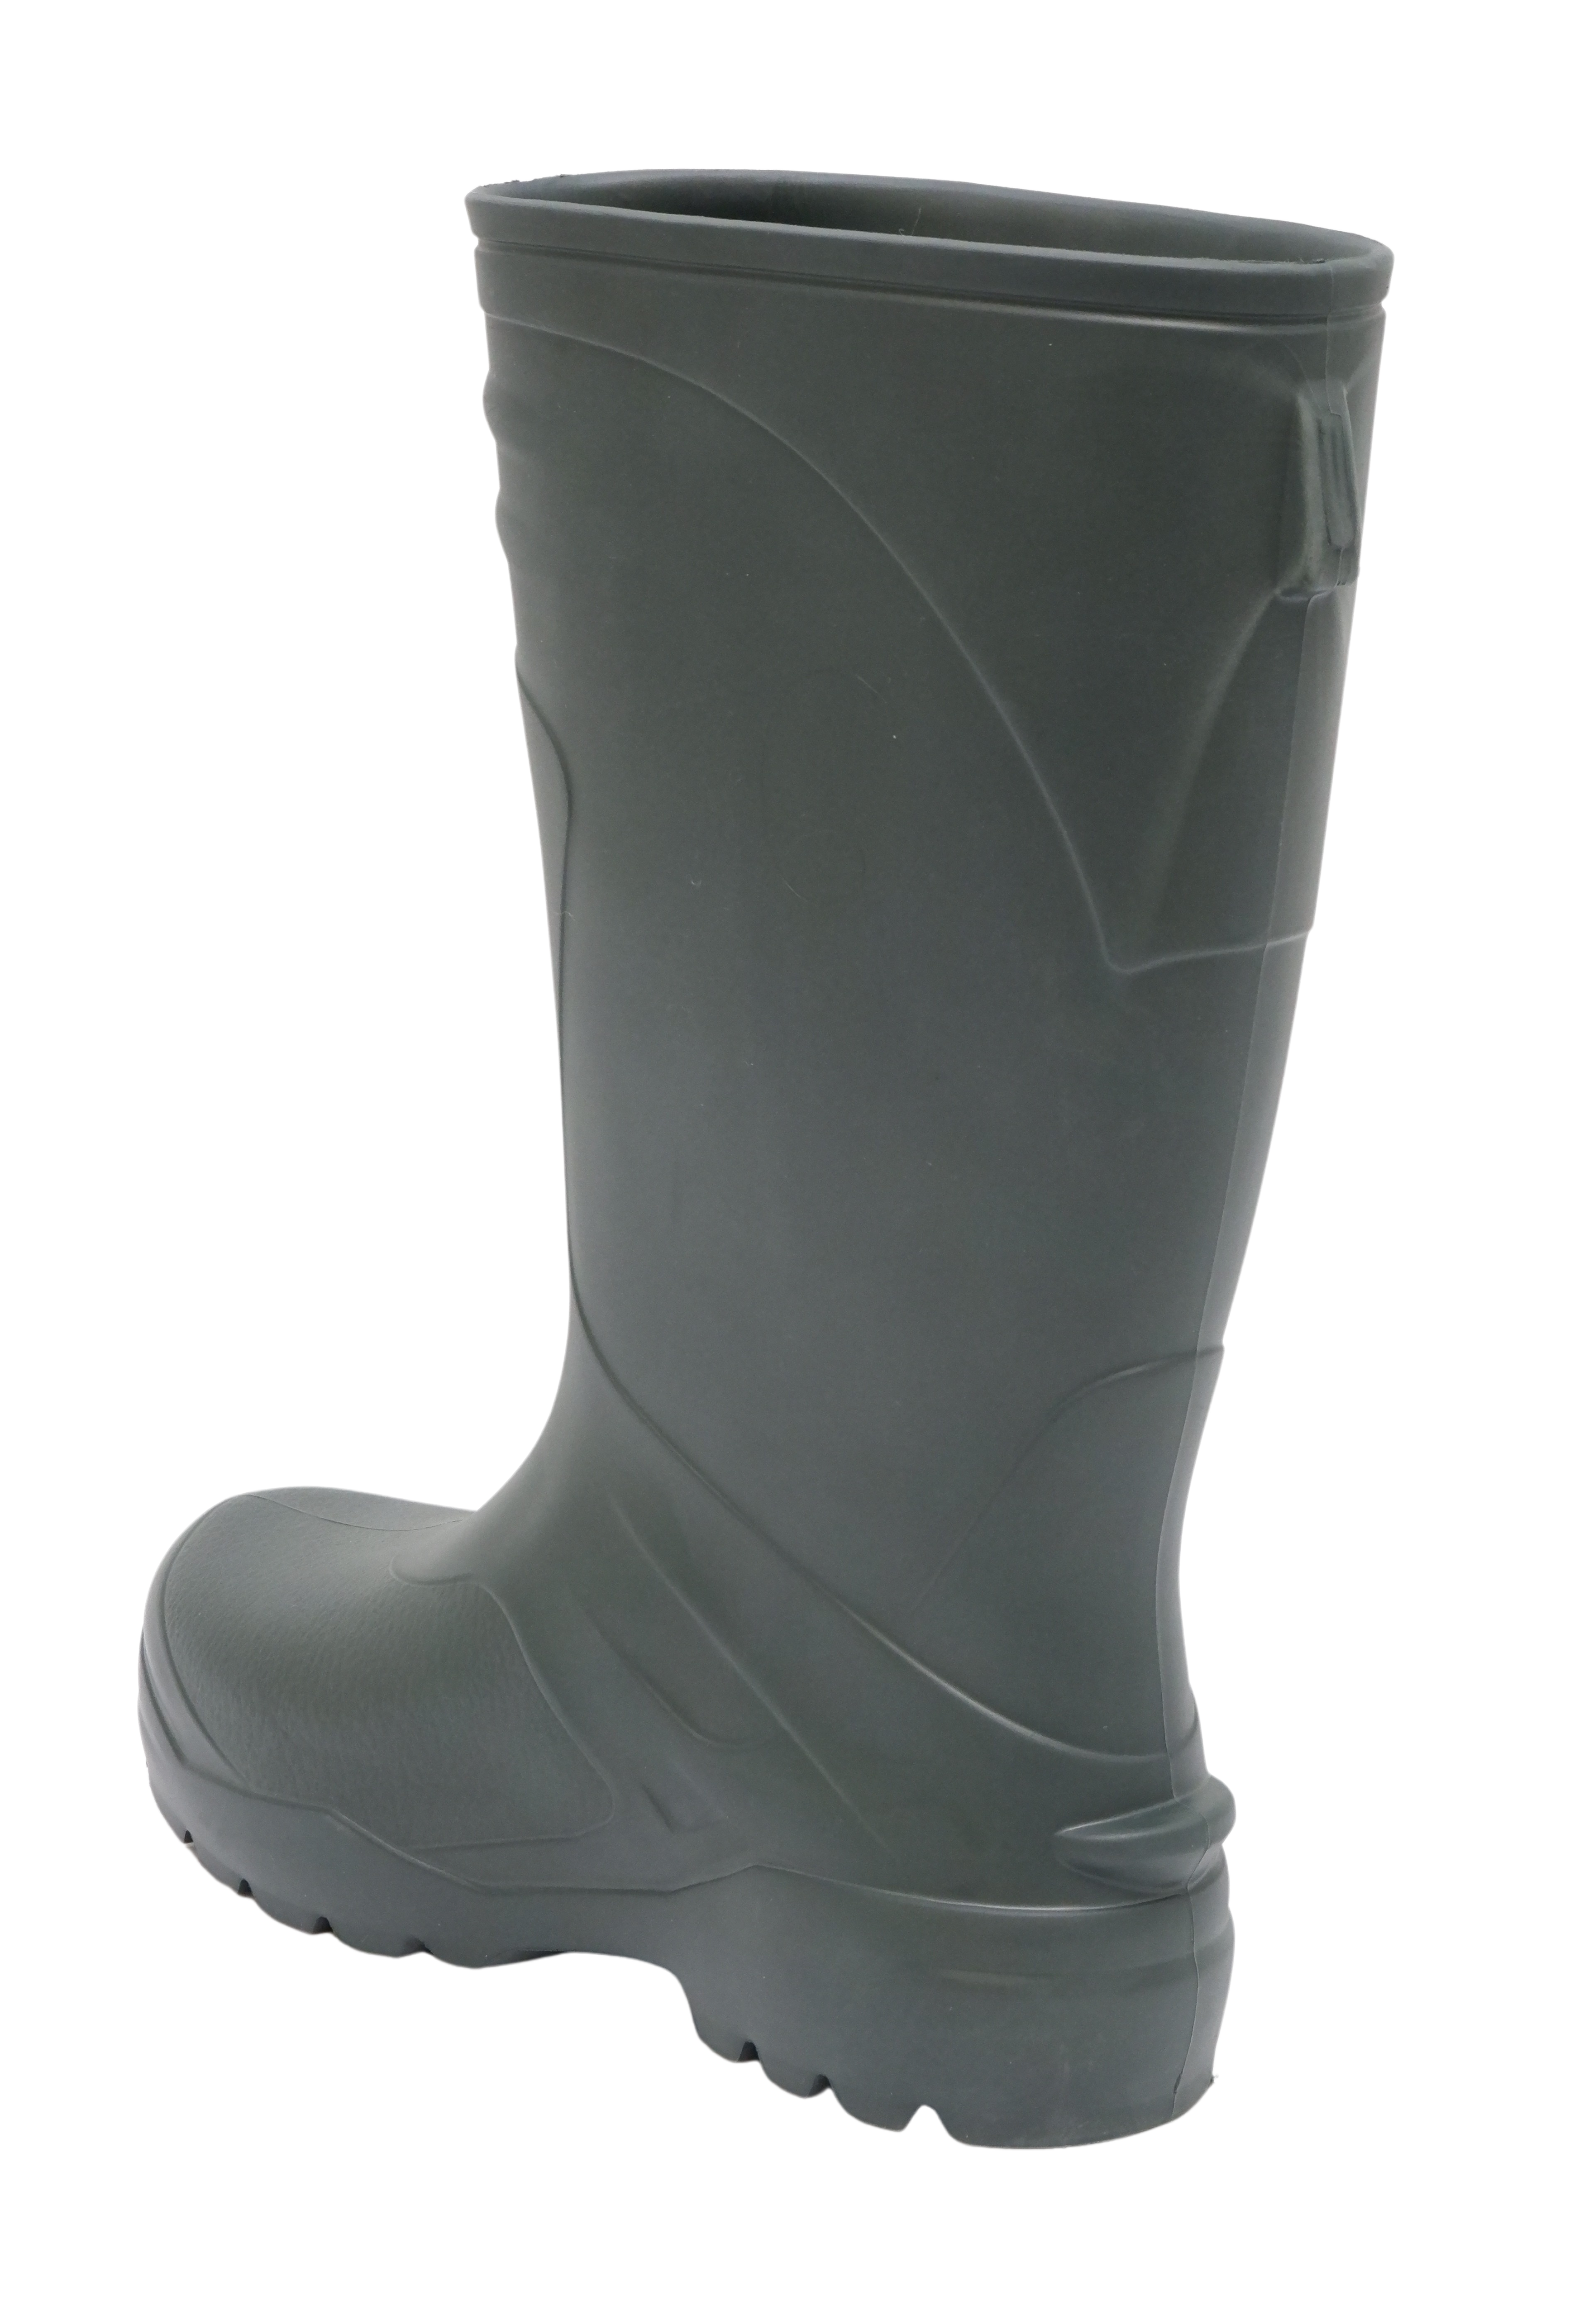 Green Trail Men's All Weather Boot Plain Toe Waterproof with Ultra Light EVA 4-Season | Size 2 - 14